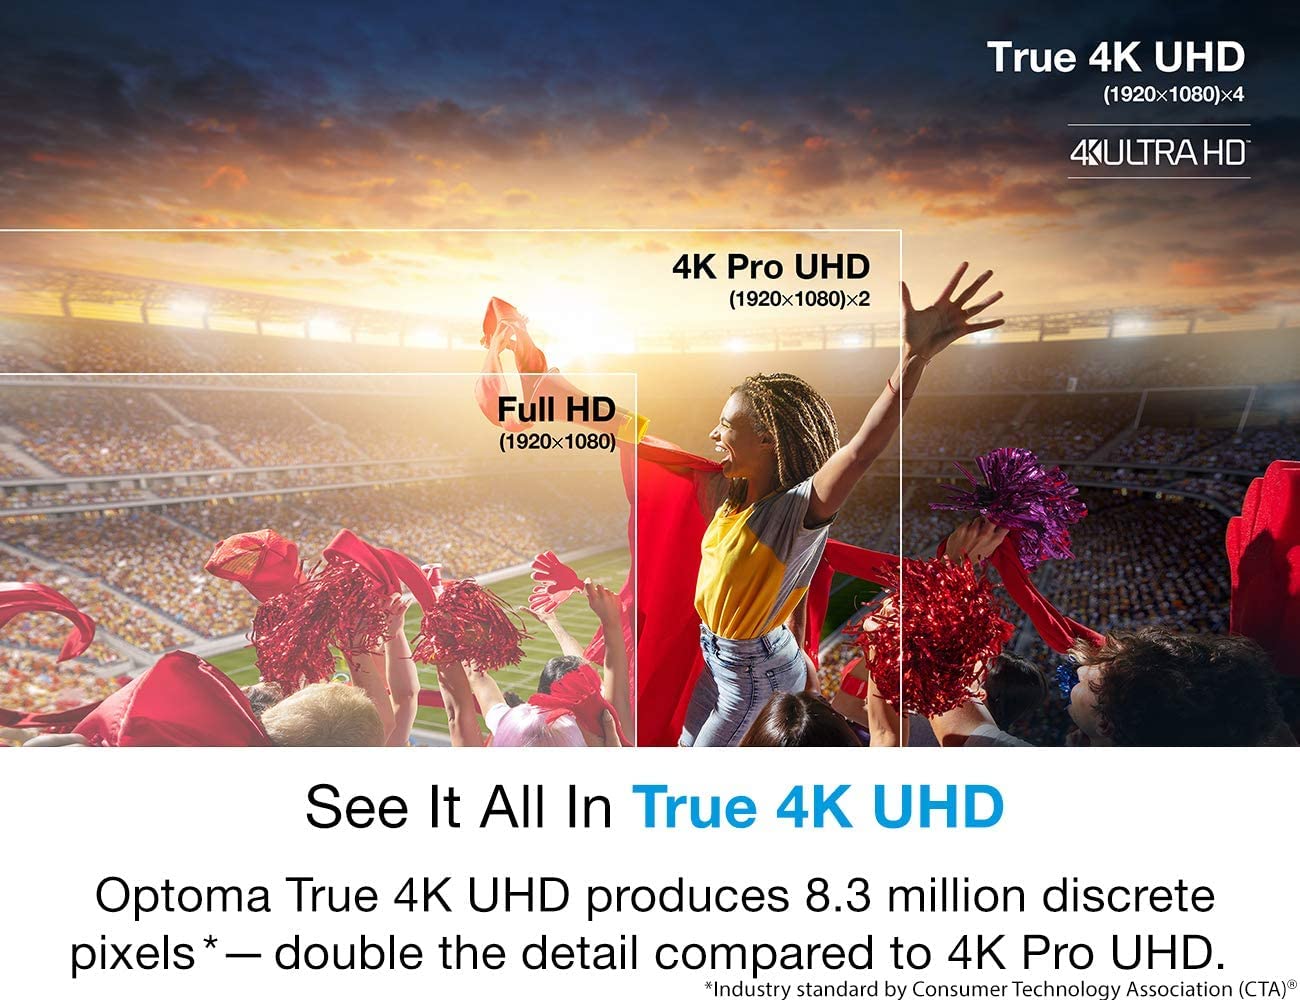 Optoma UHD35STx Short Throw True 4K UHD Gaming and Home Entertainment Projector 3500 Lumens, 240Hz Refresh, 4ms Response